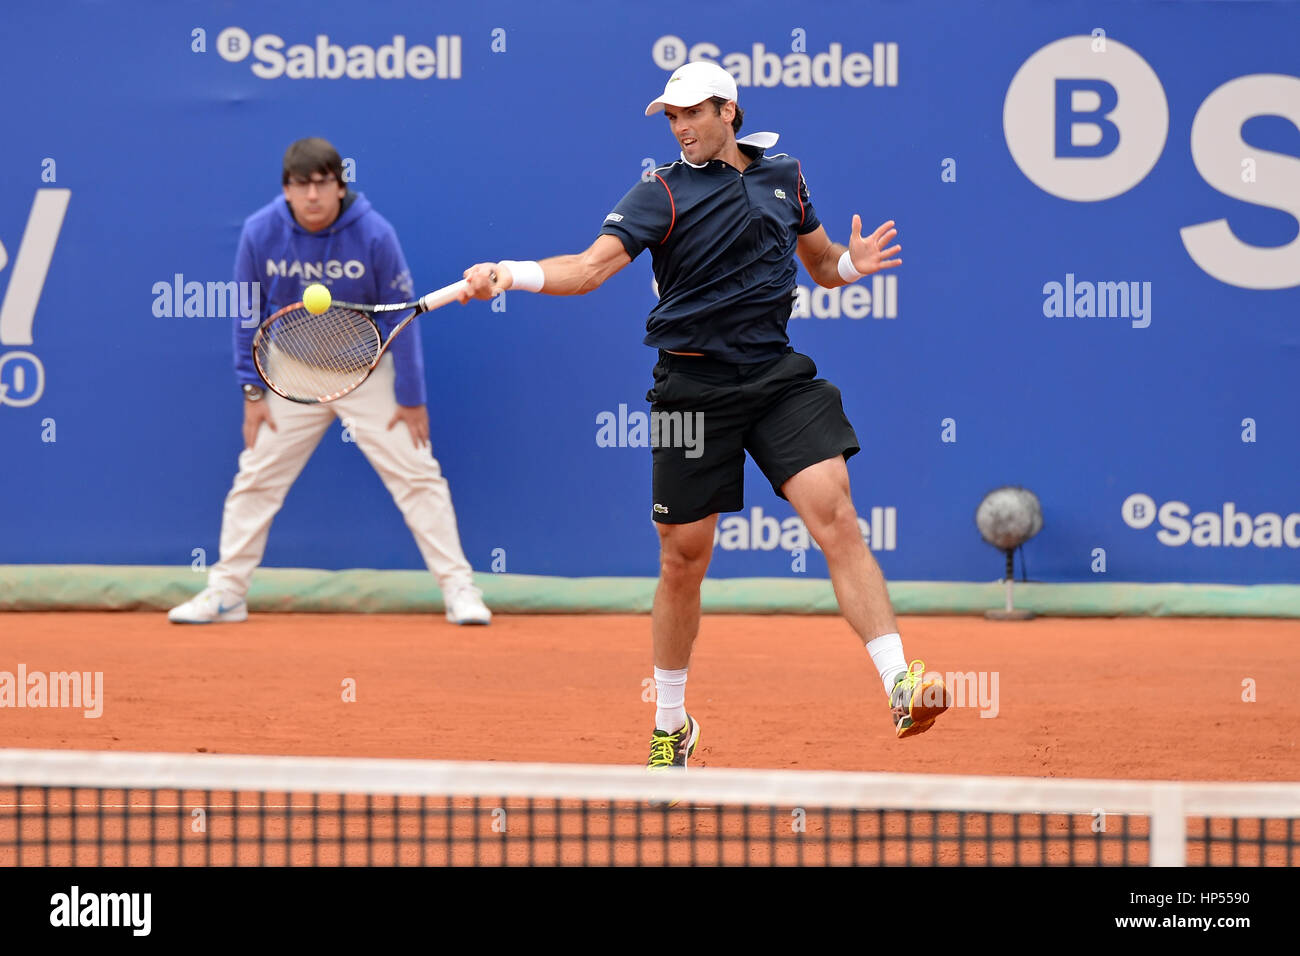 BARCELONA - APR 20: Pablo Andujar (Spanish tennis player) plays at the ...